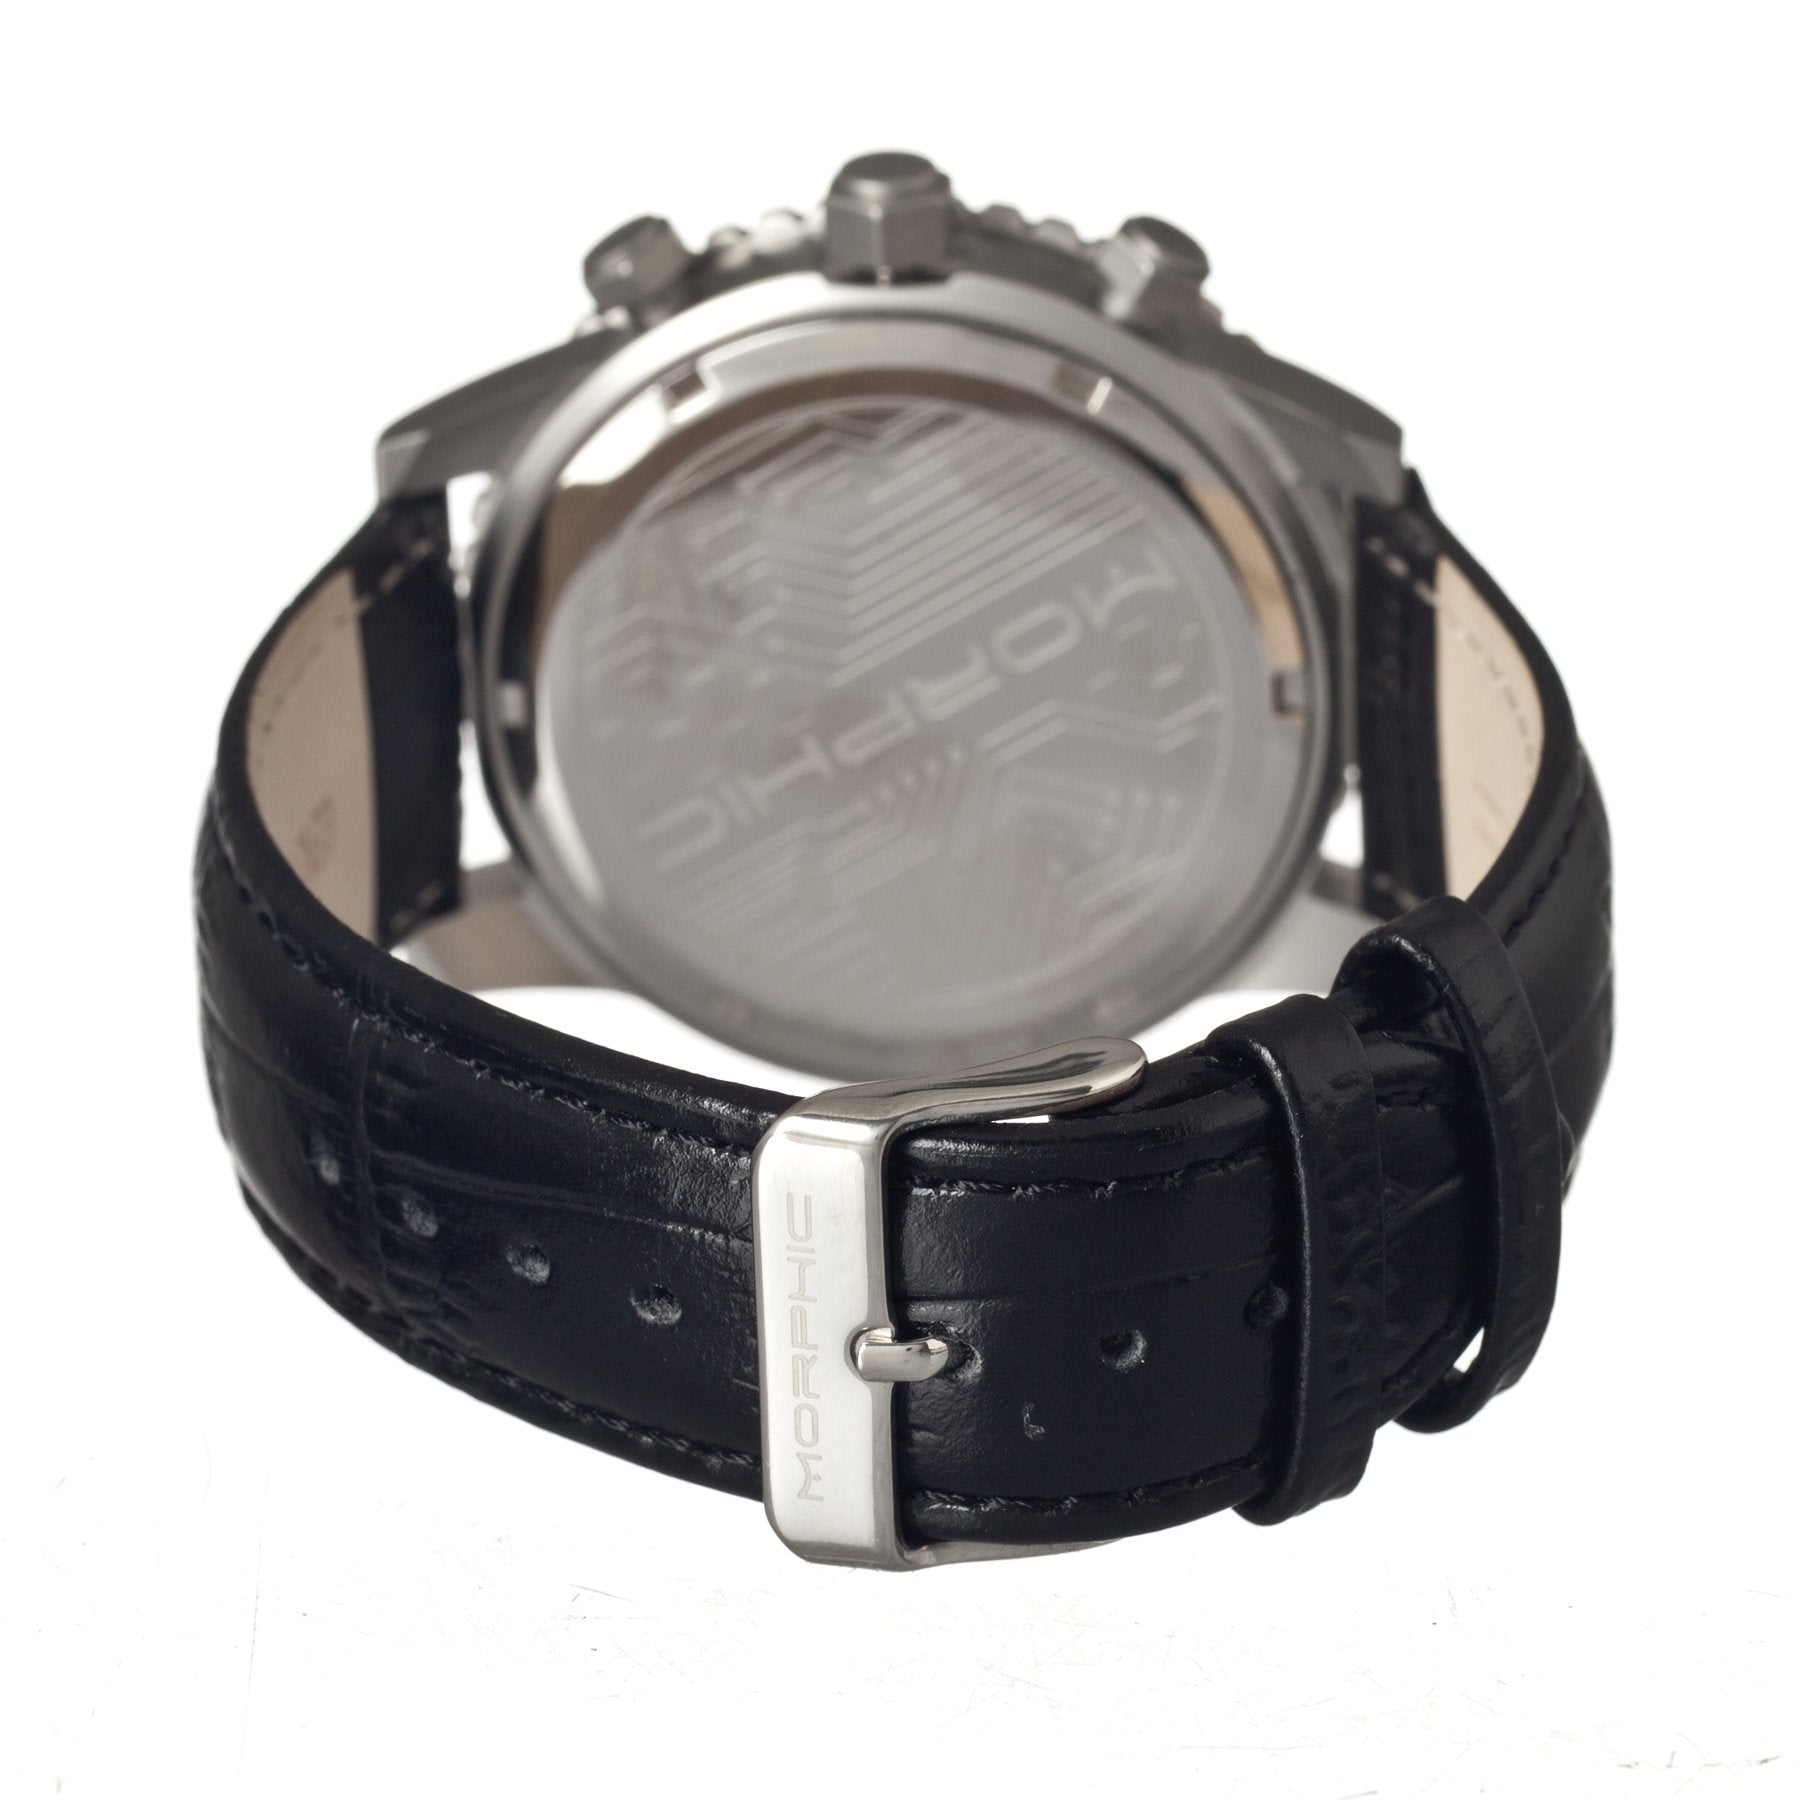 Morphic M33 Series Chronograph Men's Watch w/ Date - Silver - MPH3301